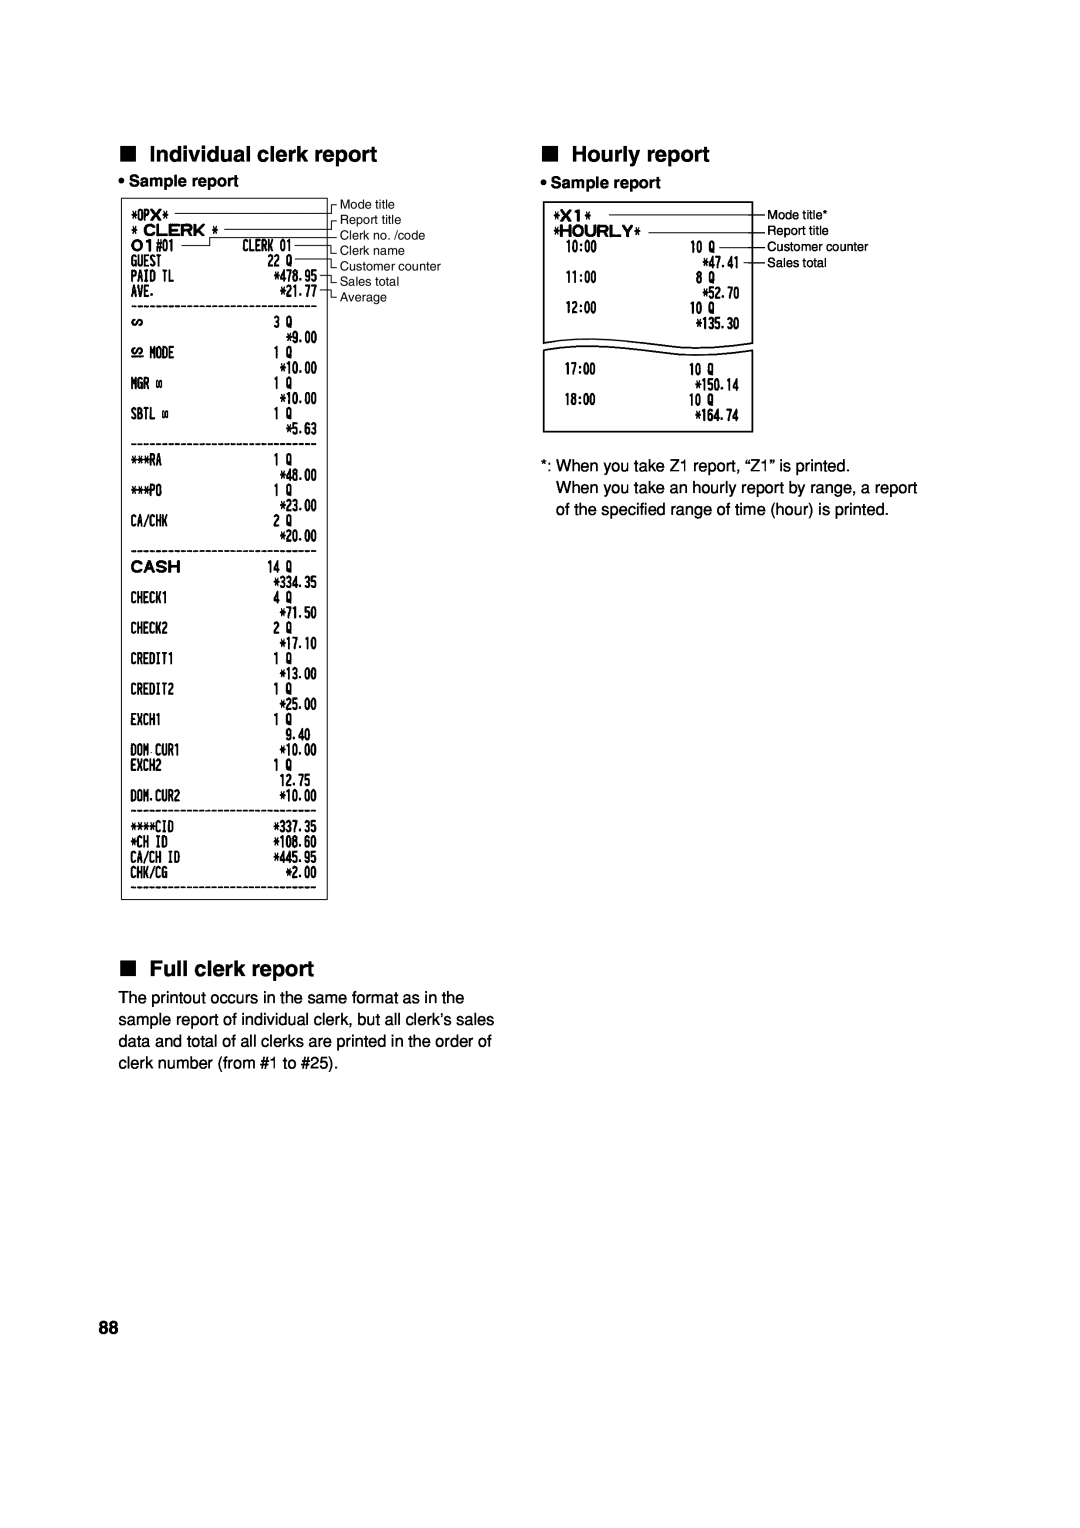 Sharp XE-A303 instruction manual Individual clerk report, Full clerk report, Hourly report, Sample report 